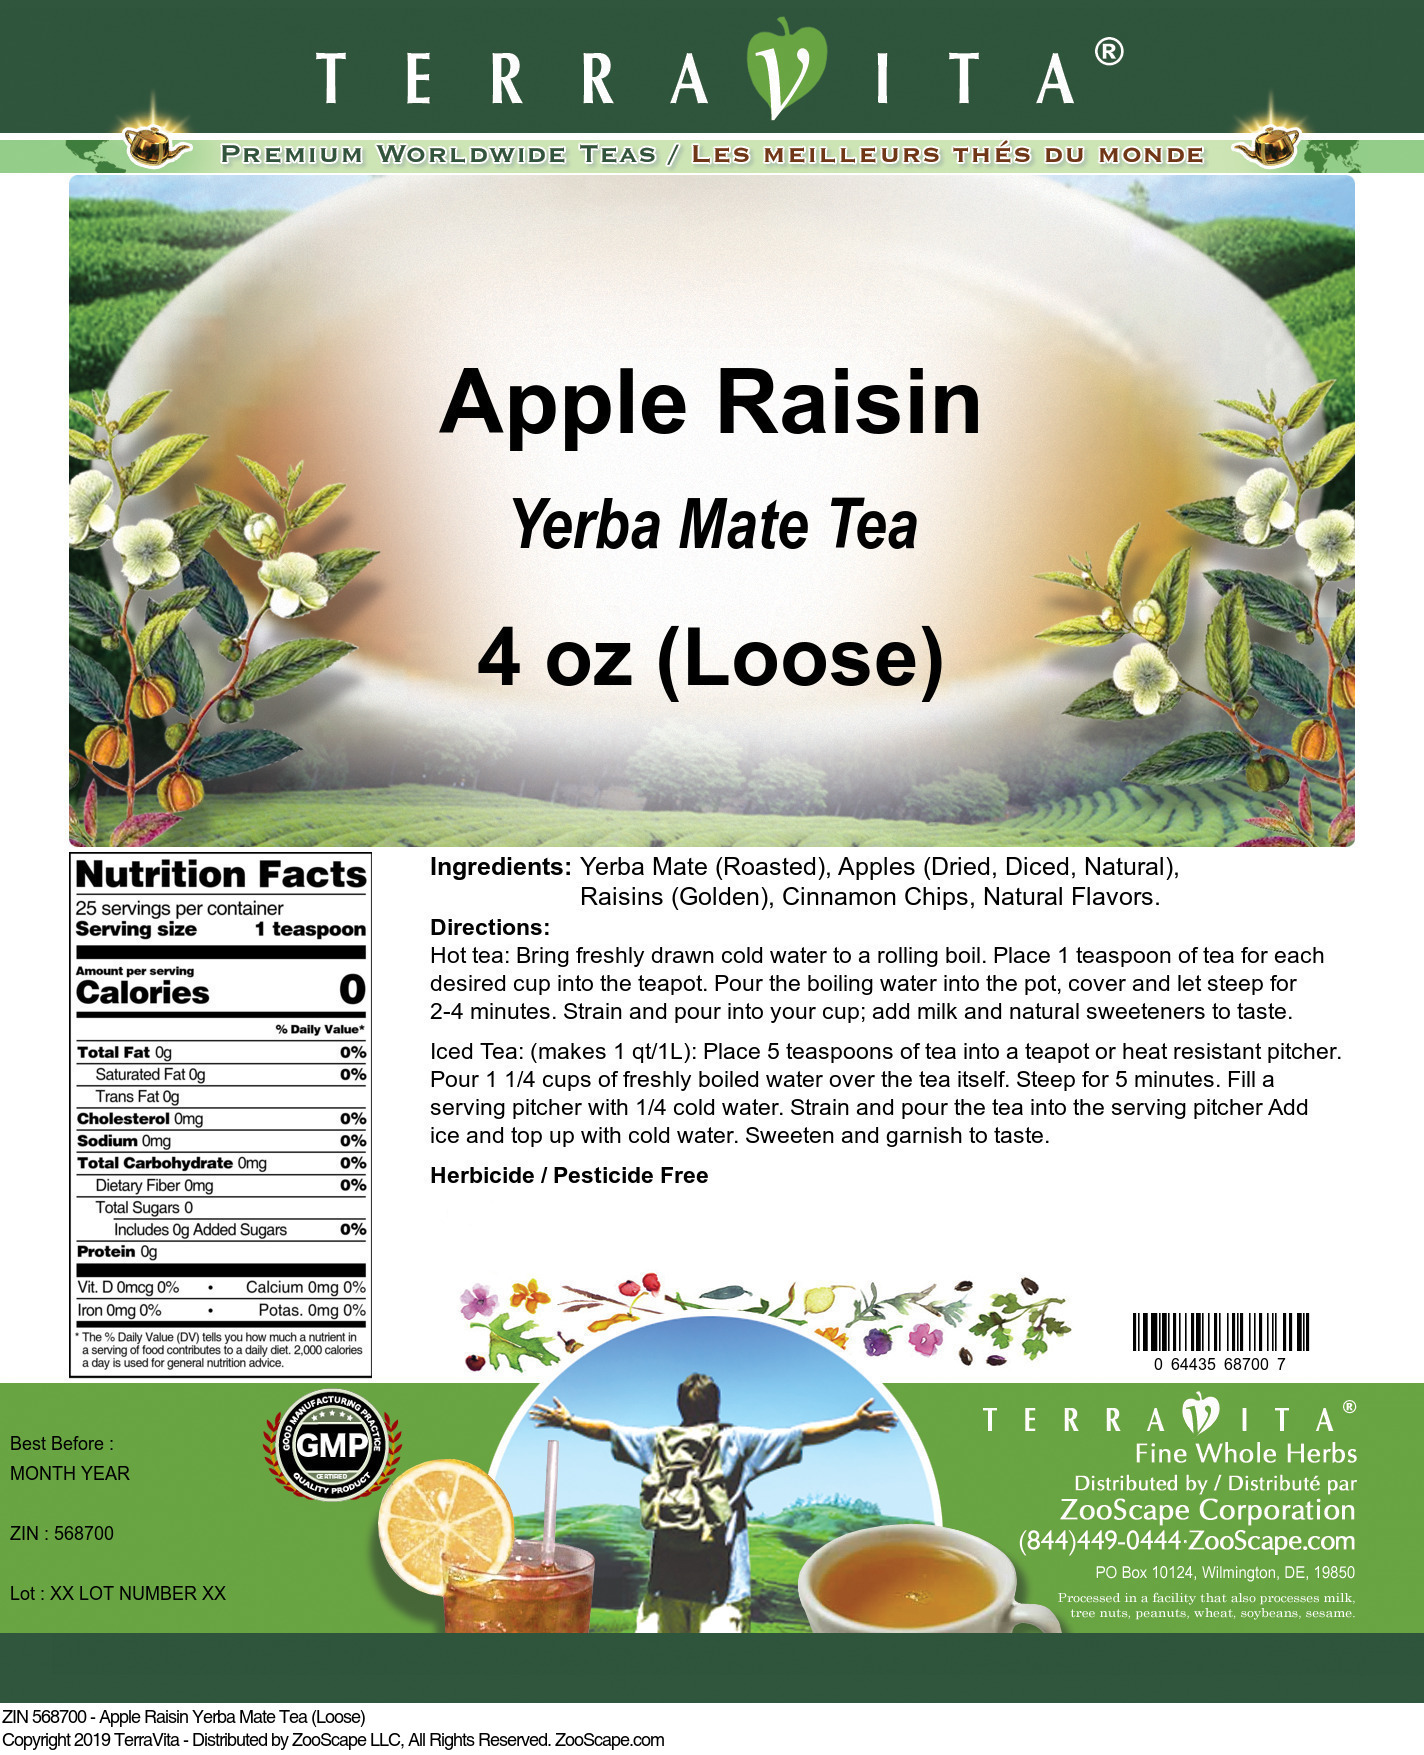 Apple Raisin Yerba Mate Tea (Loose) - Label